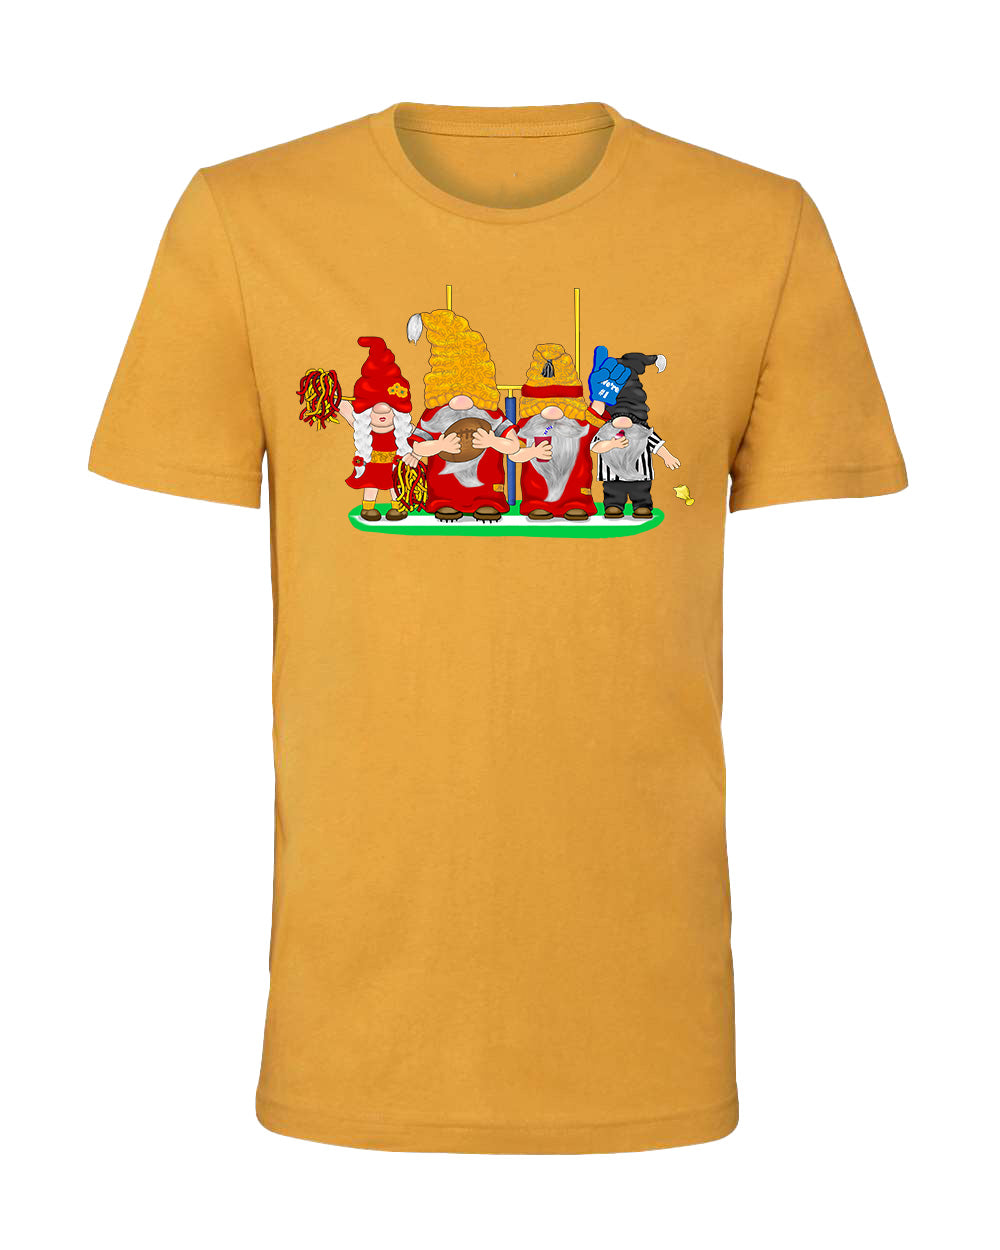 Red & Gold Football Gnomes on Men's T-shirt (similar to Kansas City)